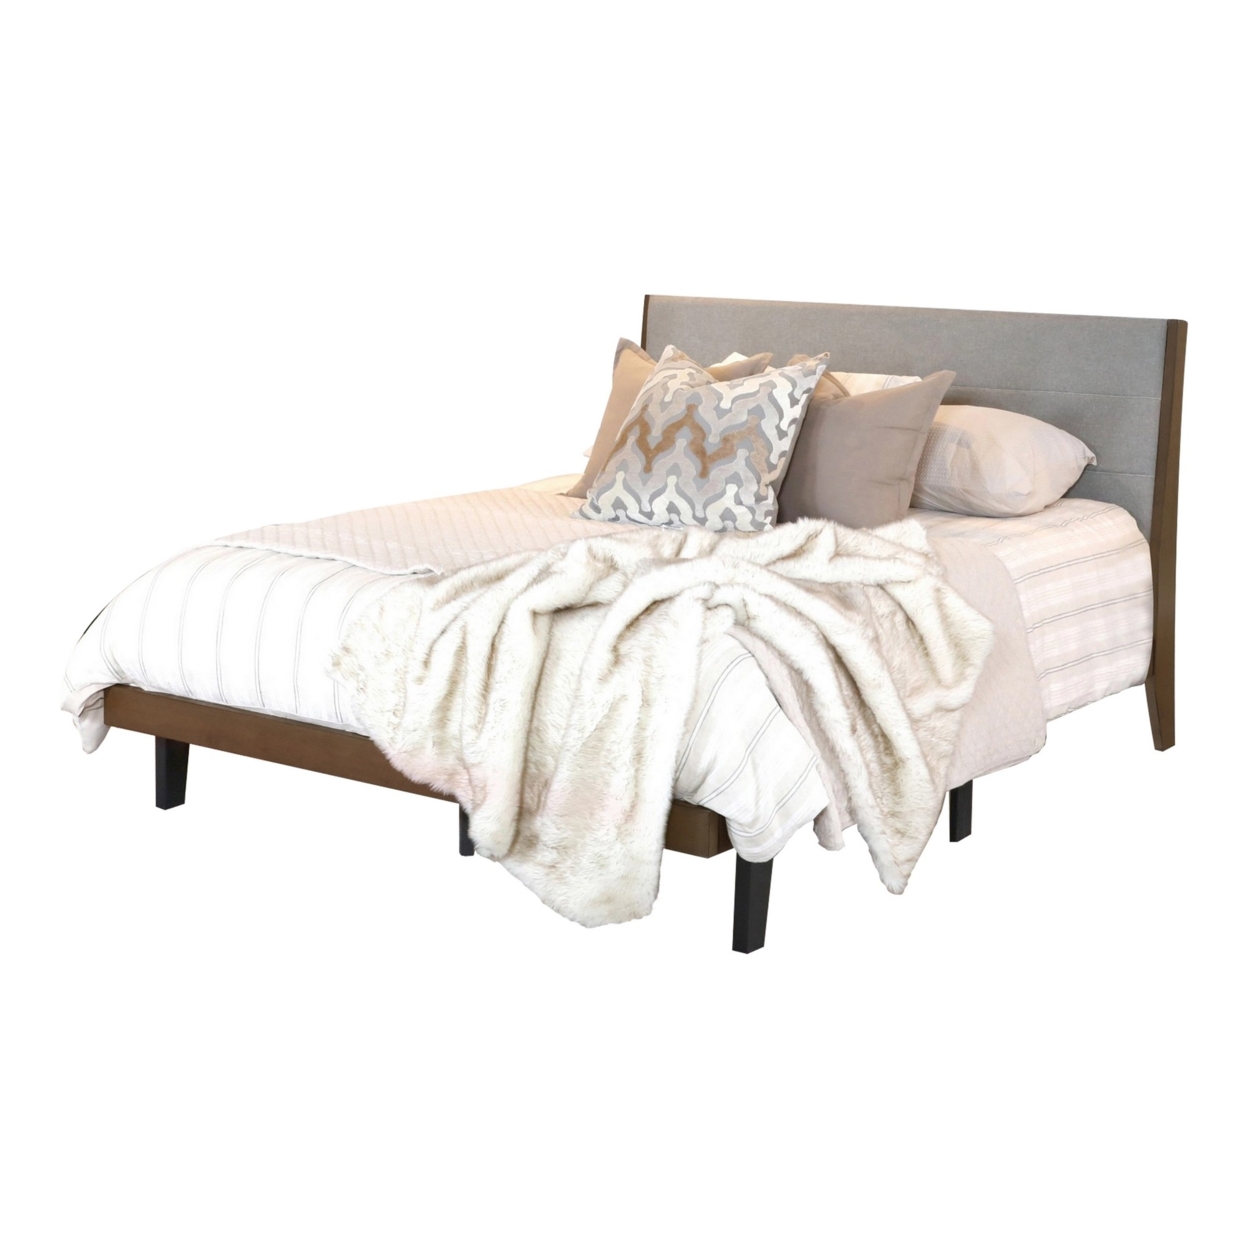 Vee King Size Platform Bed, Modern Low Profile Angled Legs, Natural Brown- Saltoro Sherpi